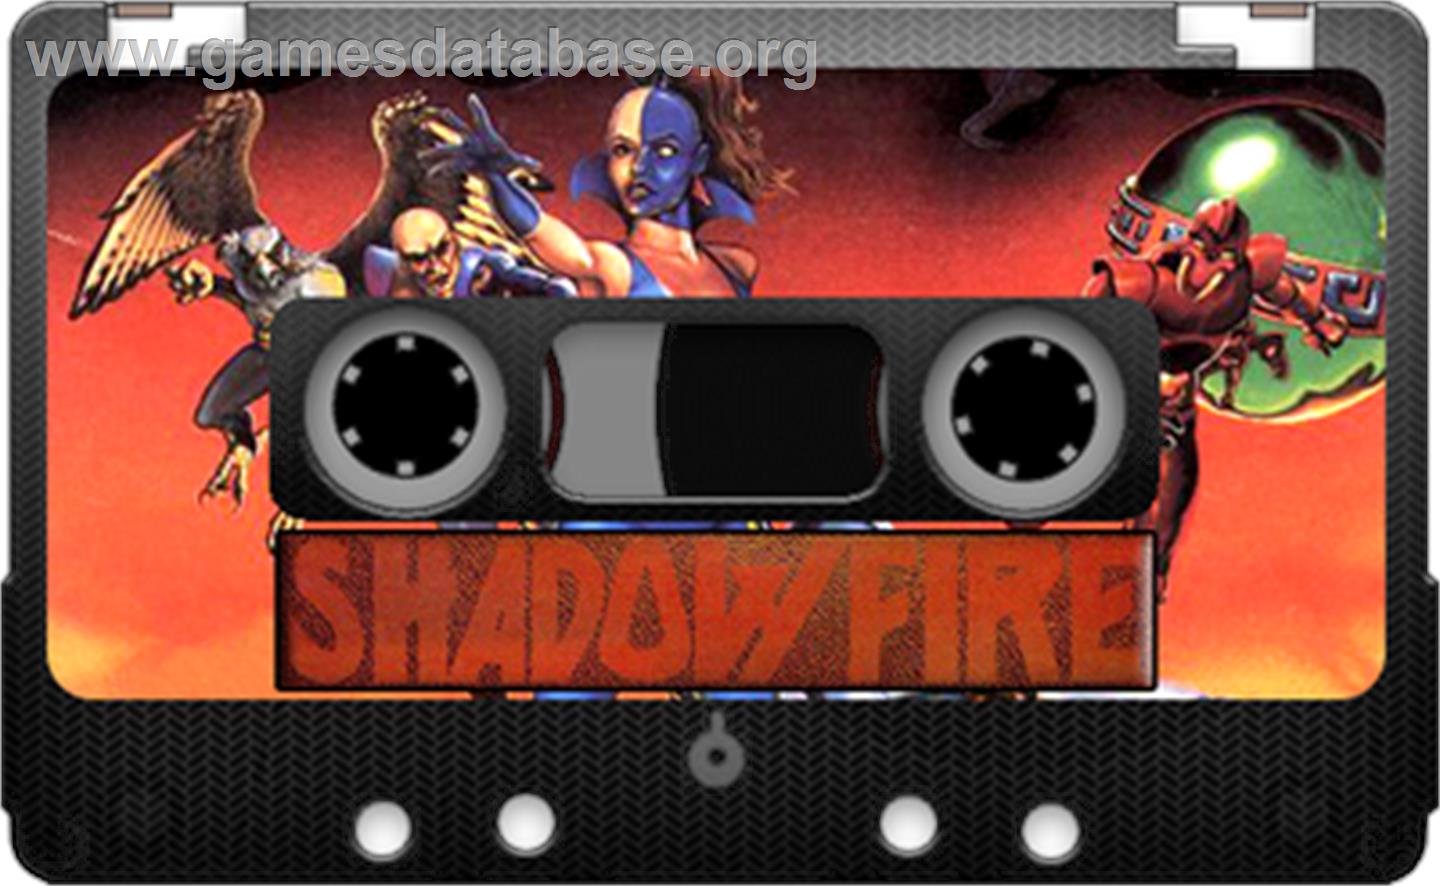 Shadowfire - Sinclair ZX Spectrum - Artwork - Cartridge